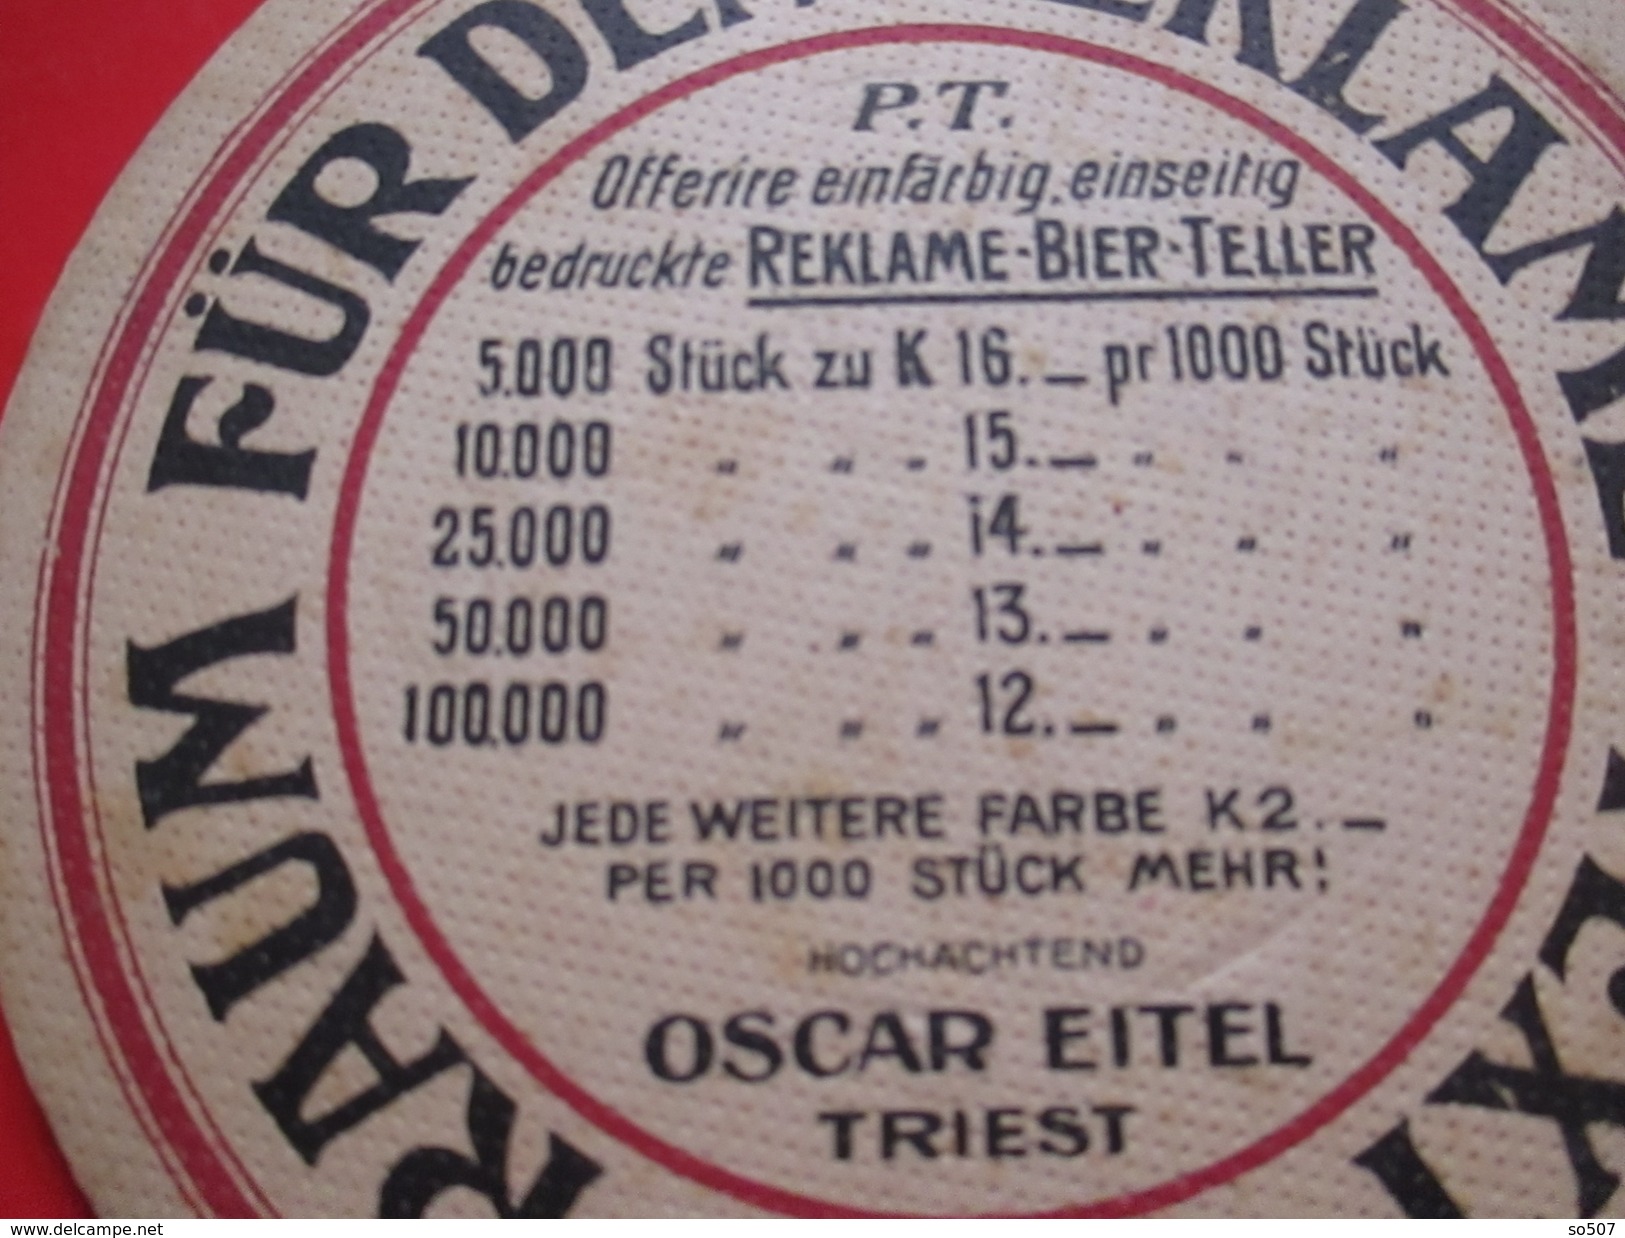 Old Advertisement Mat, Coaster, Bier, Beer, Oscar Eitel - Triest, Italy - Beer Mats